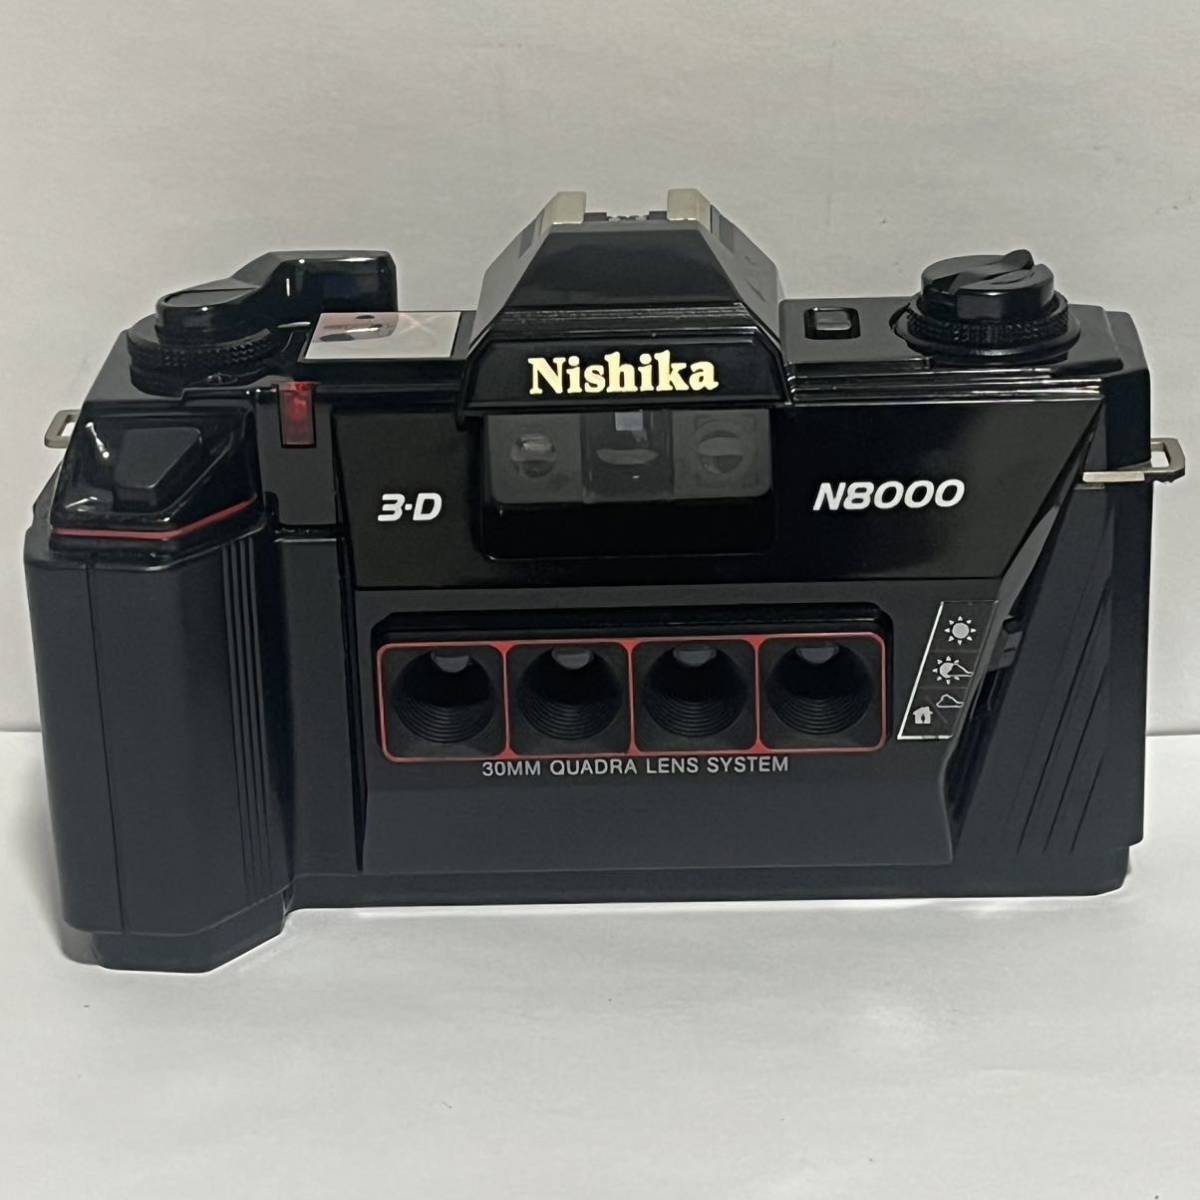 Yahoo!オークション - 希少レアカメラ NISHIKA ニシカ 3-D N8000...